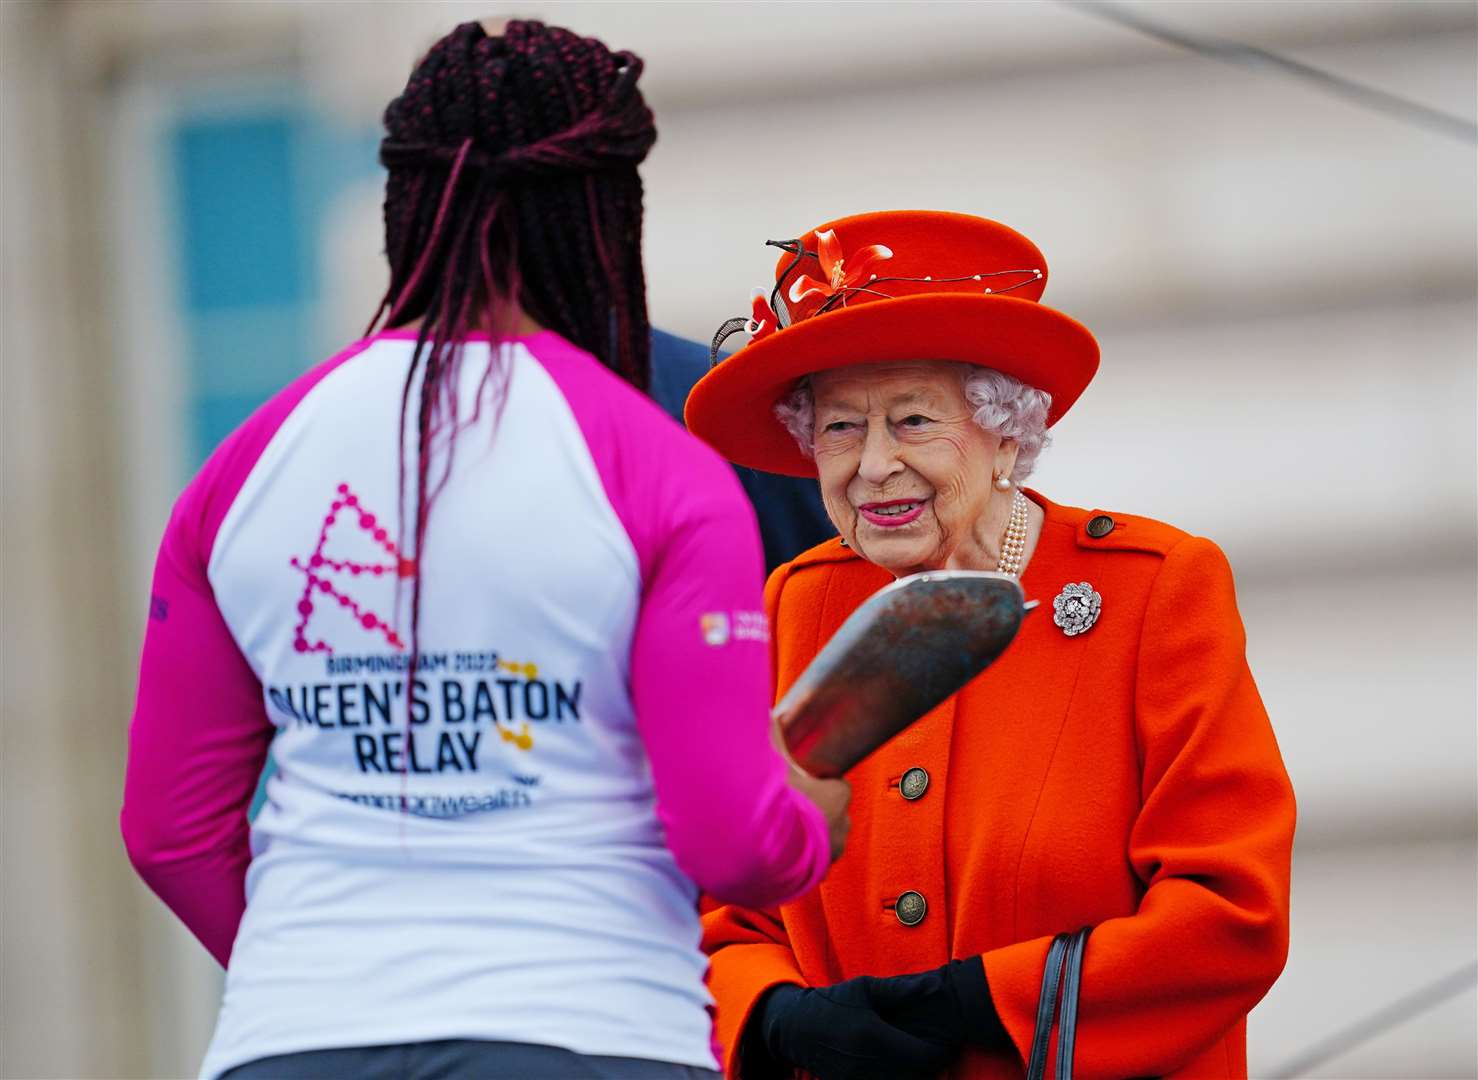 Kadeena Cox receiving the baton from The Queen at the Queen's Baton Relay launch